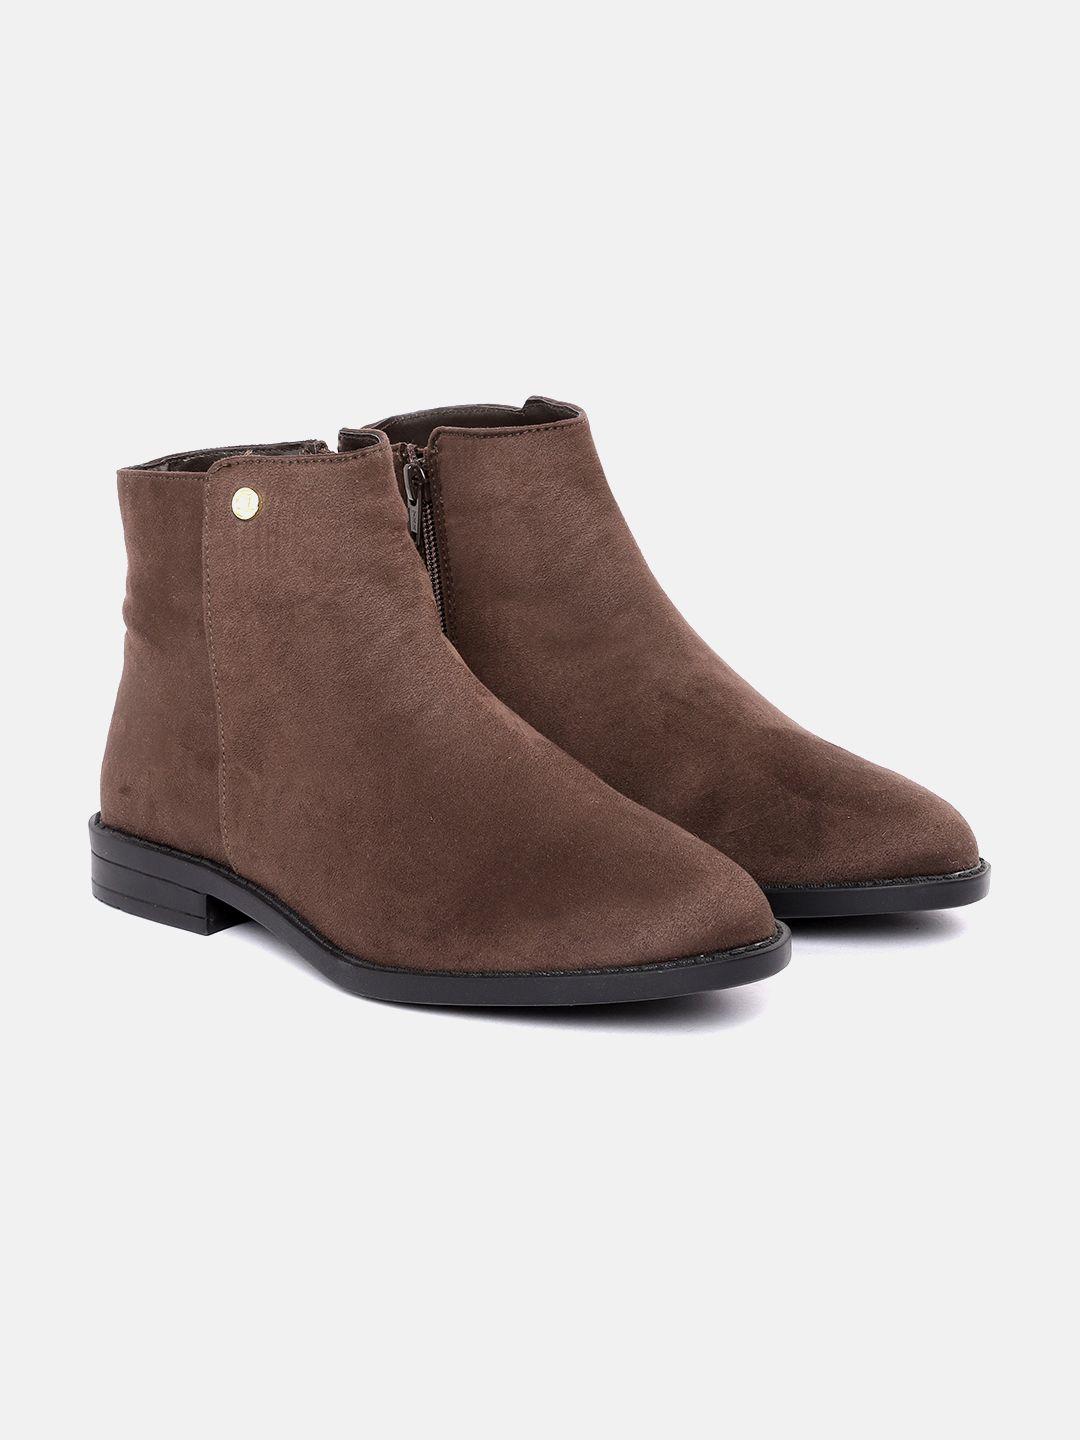 carlton-london-women-coffee-brown-solid-mid-top-flat-boots